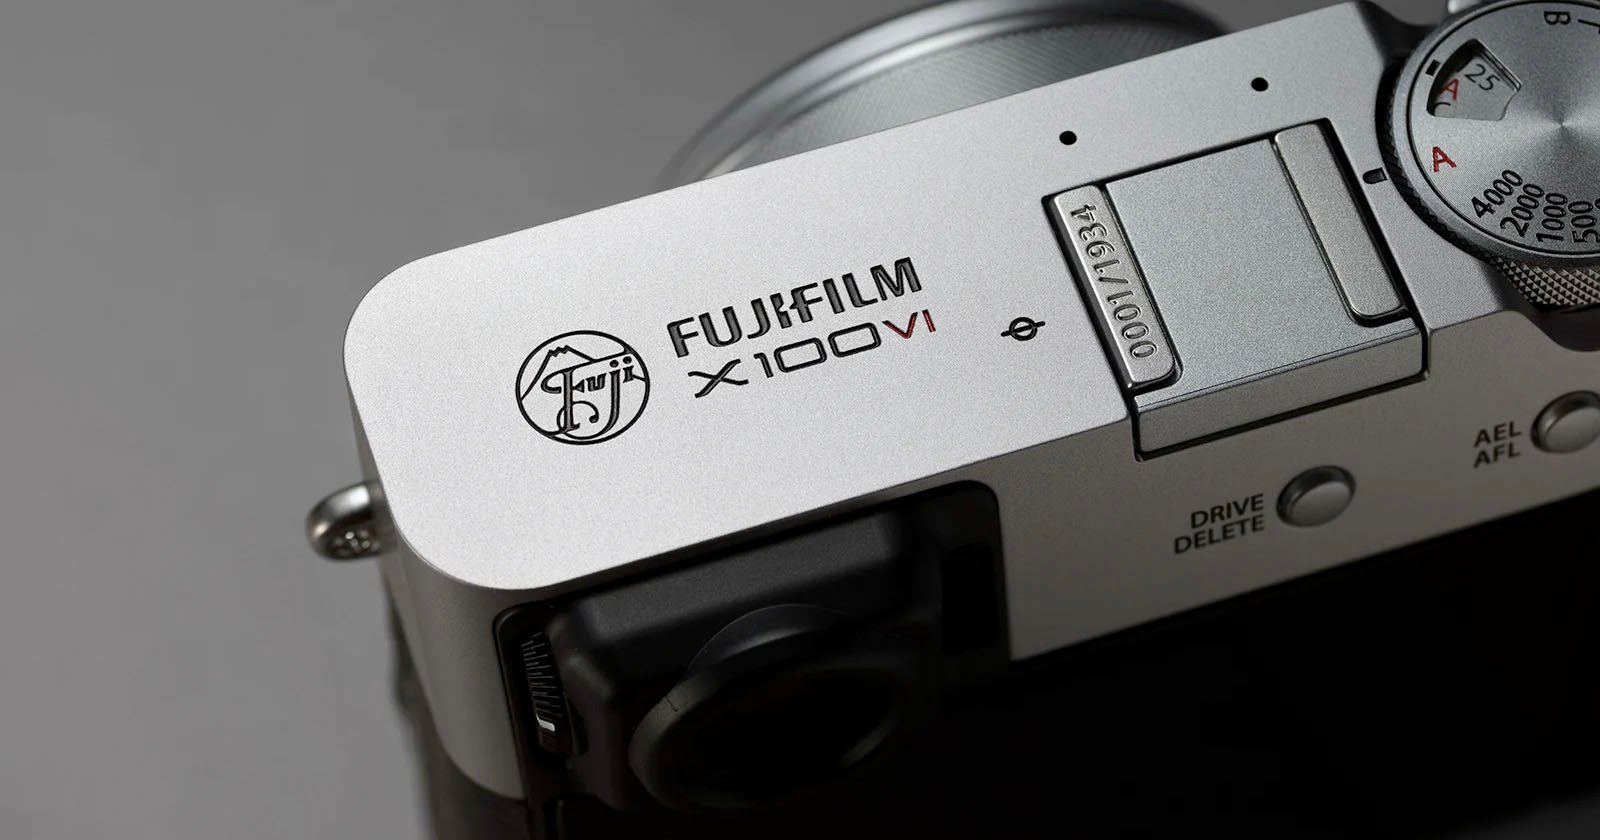  fujifilm online store buckles under surge buy limited 